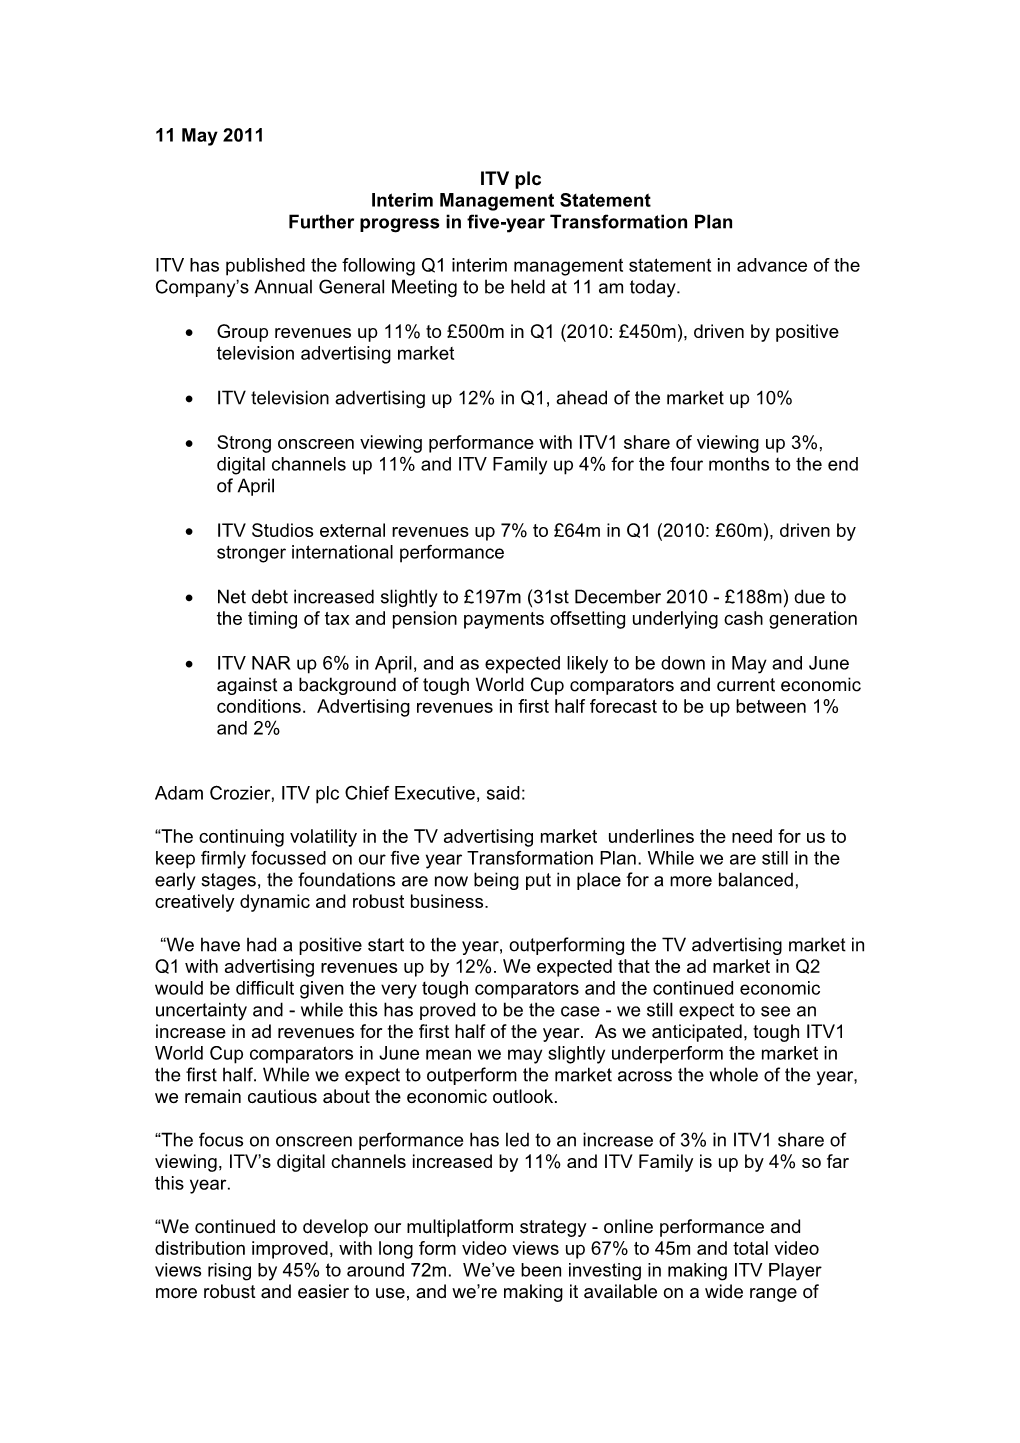 11 May 2011 ITV Plc Interim Management Statement Further